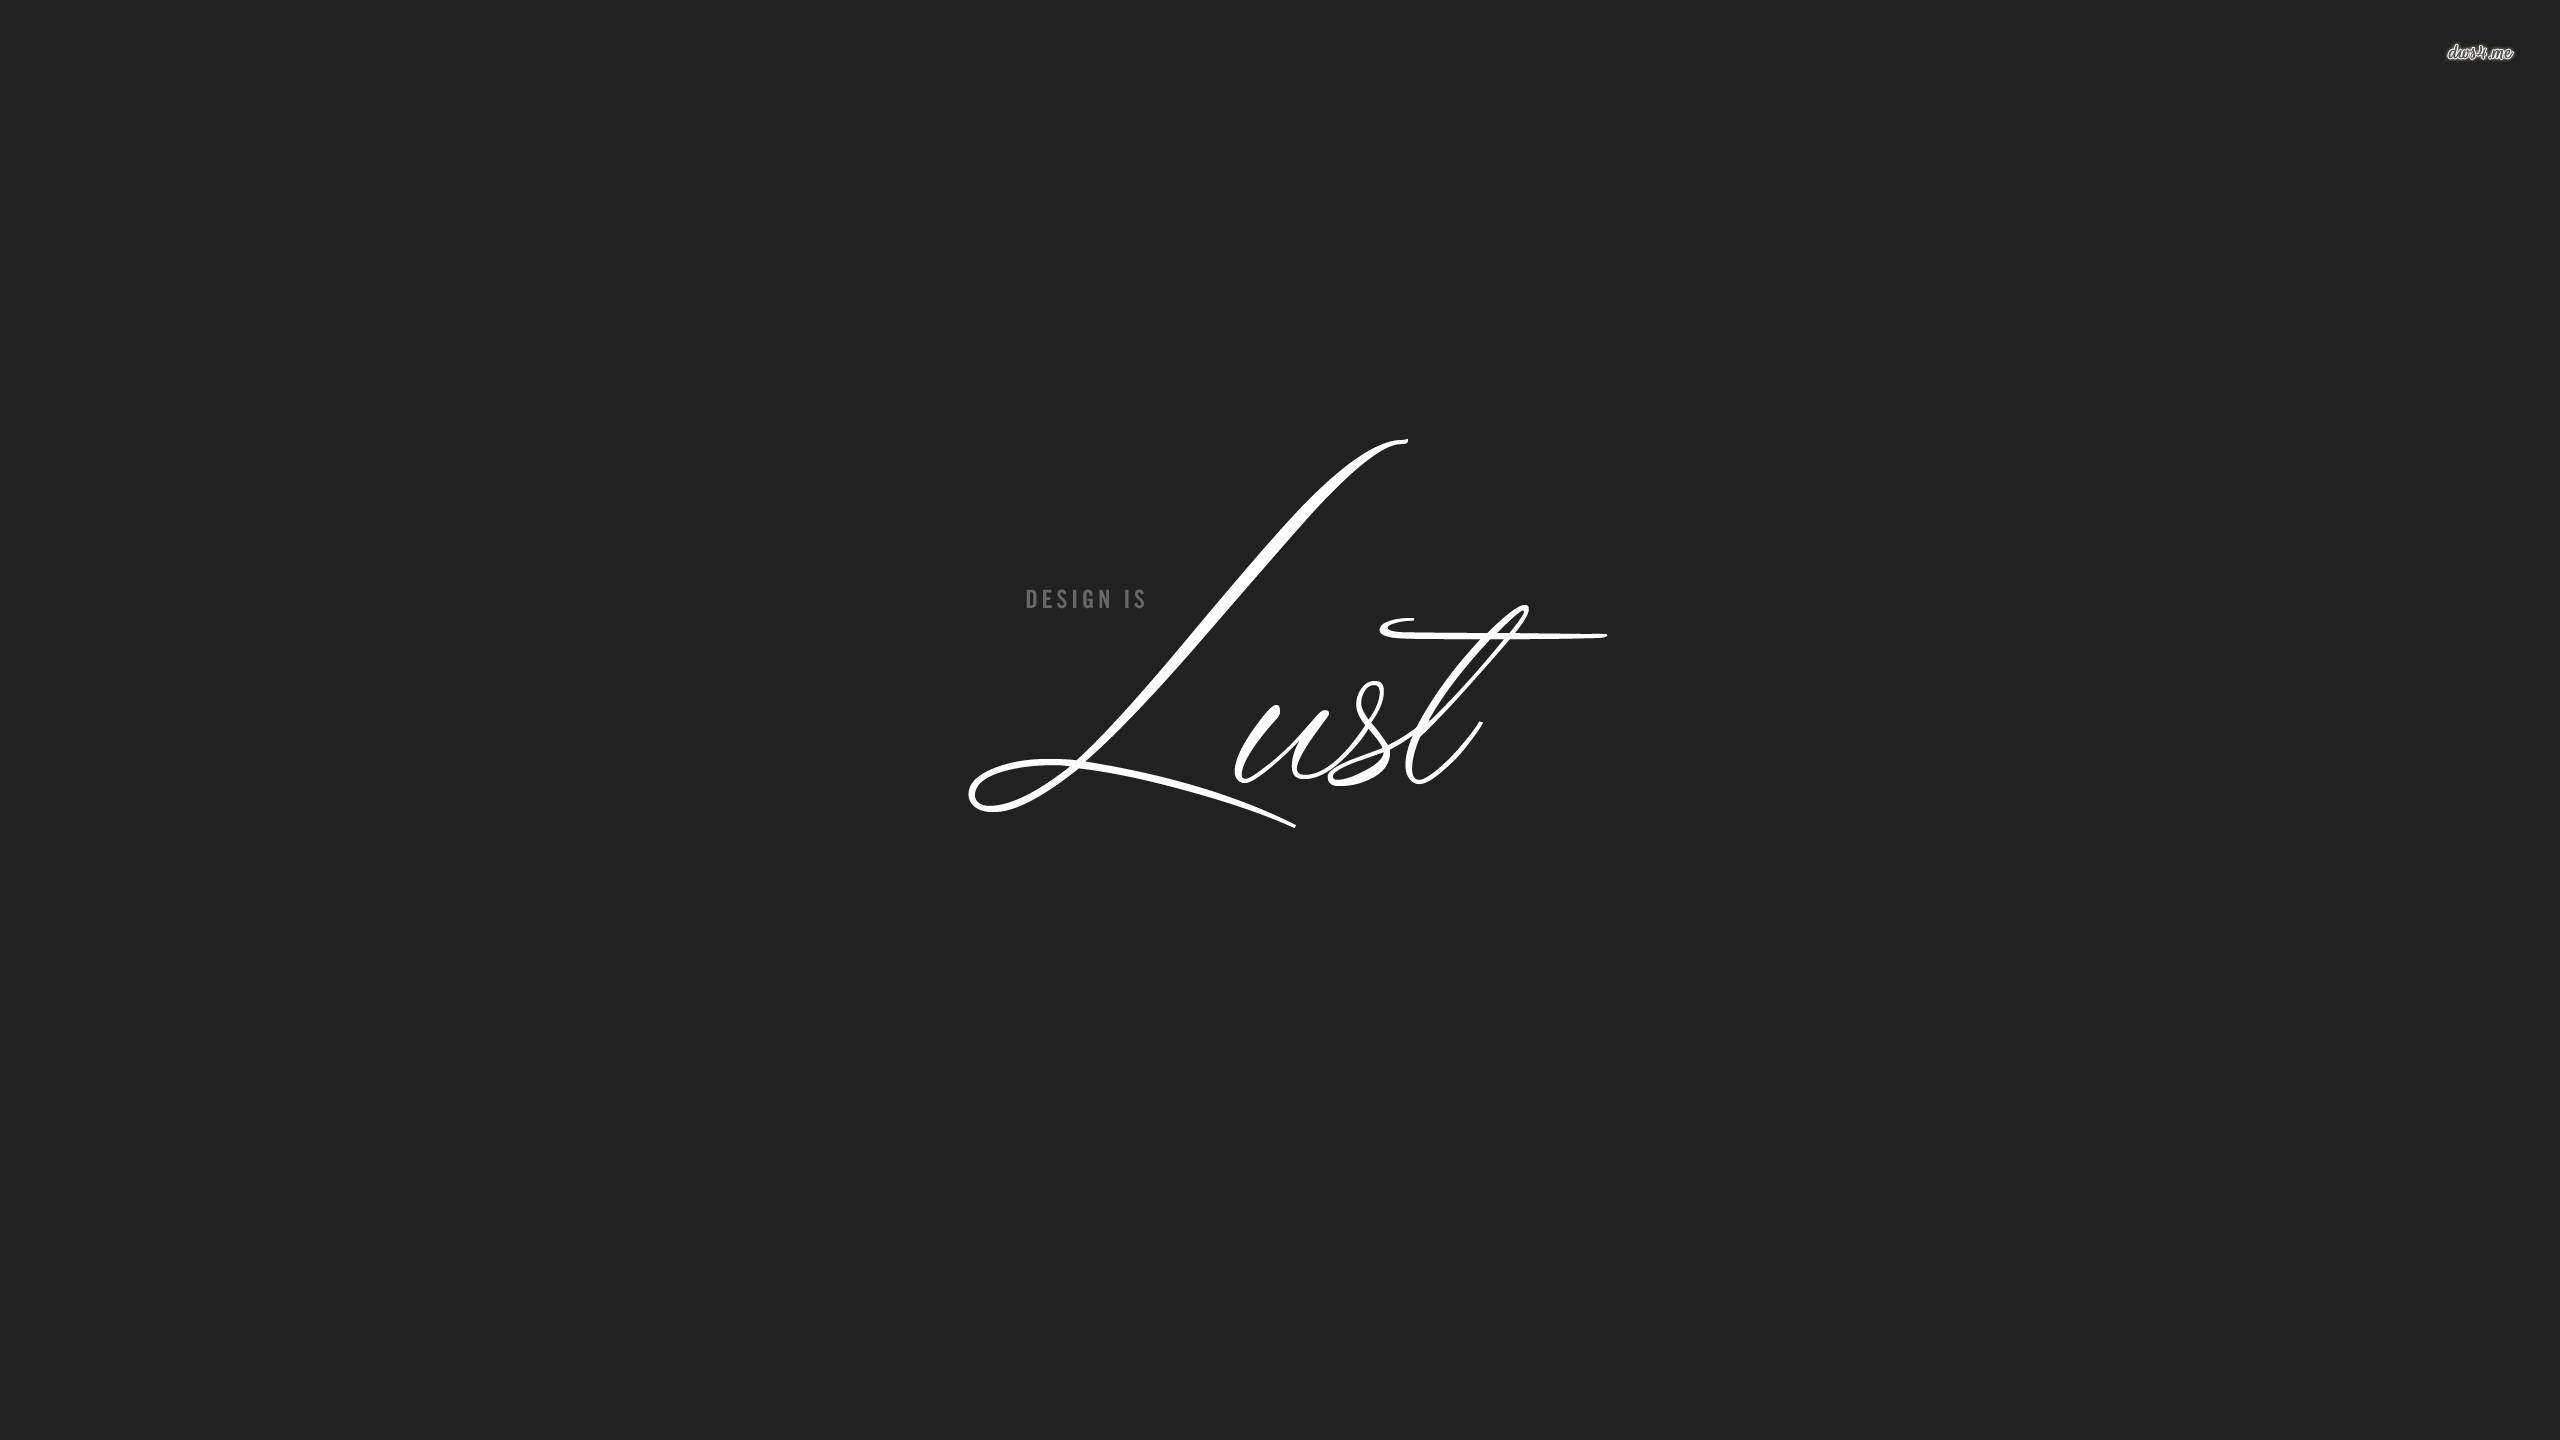 Design Is Lust Wallpaper Typography